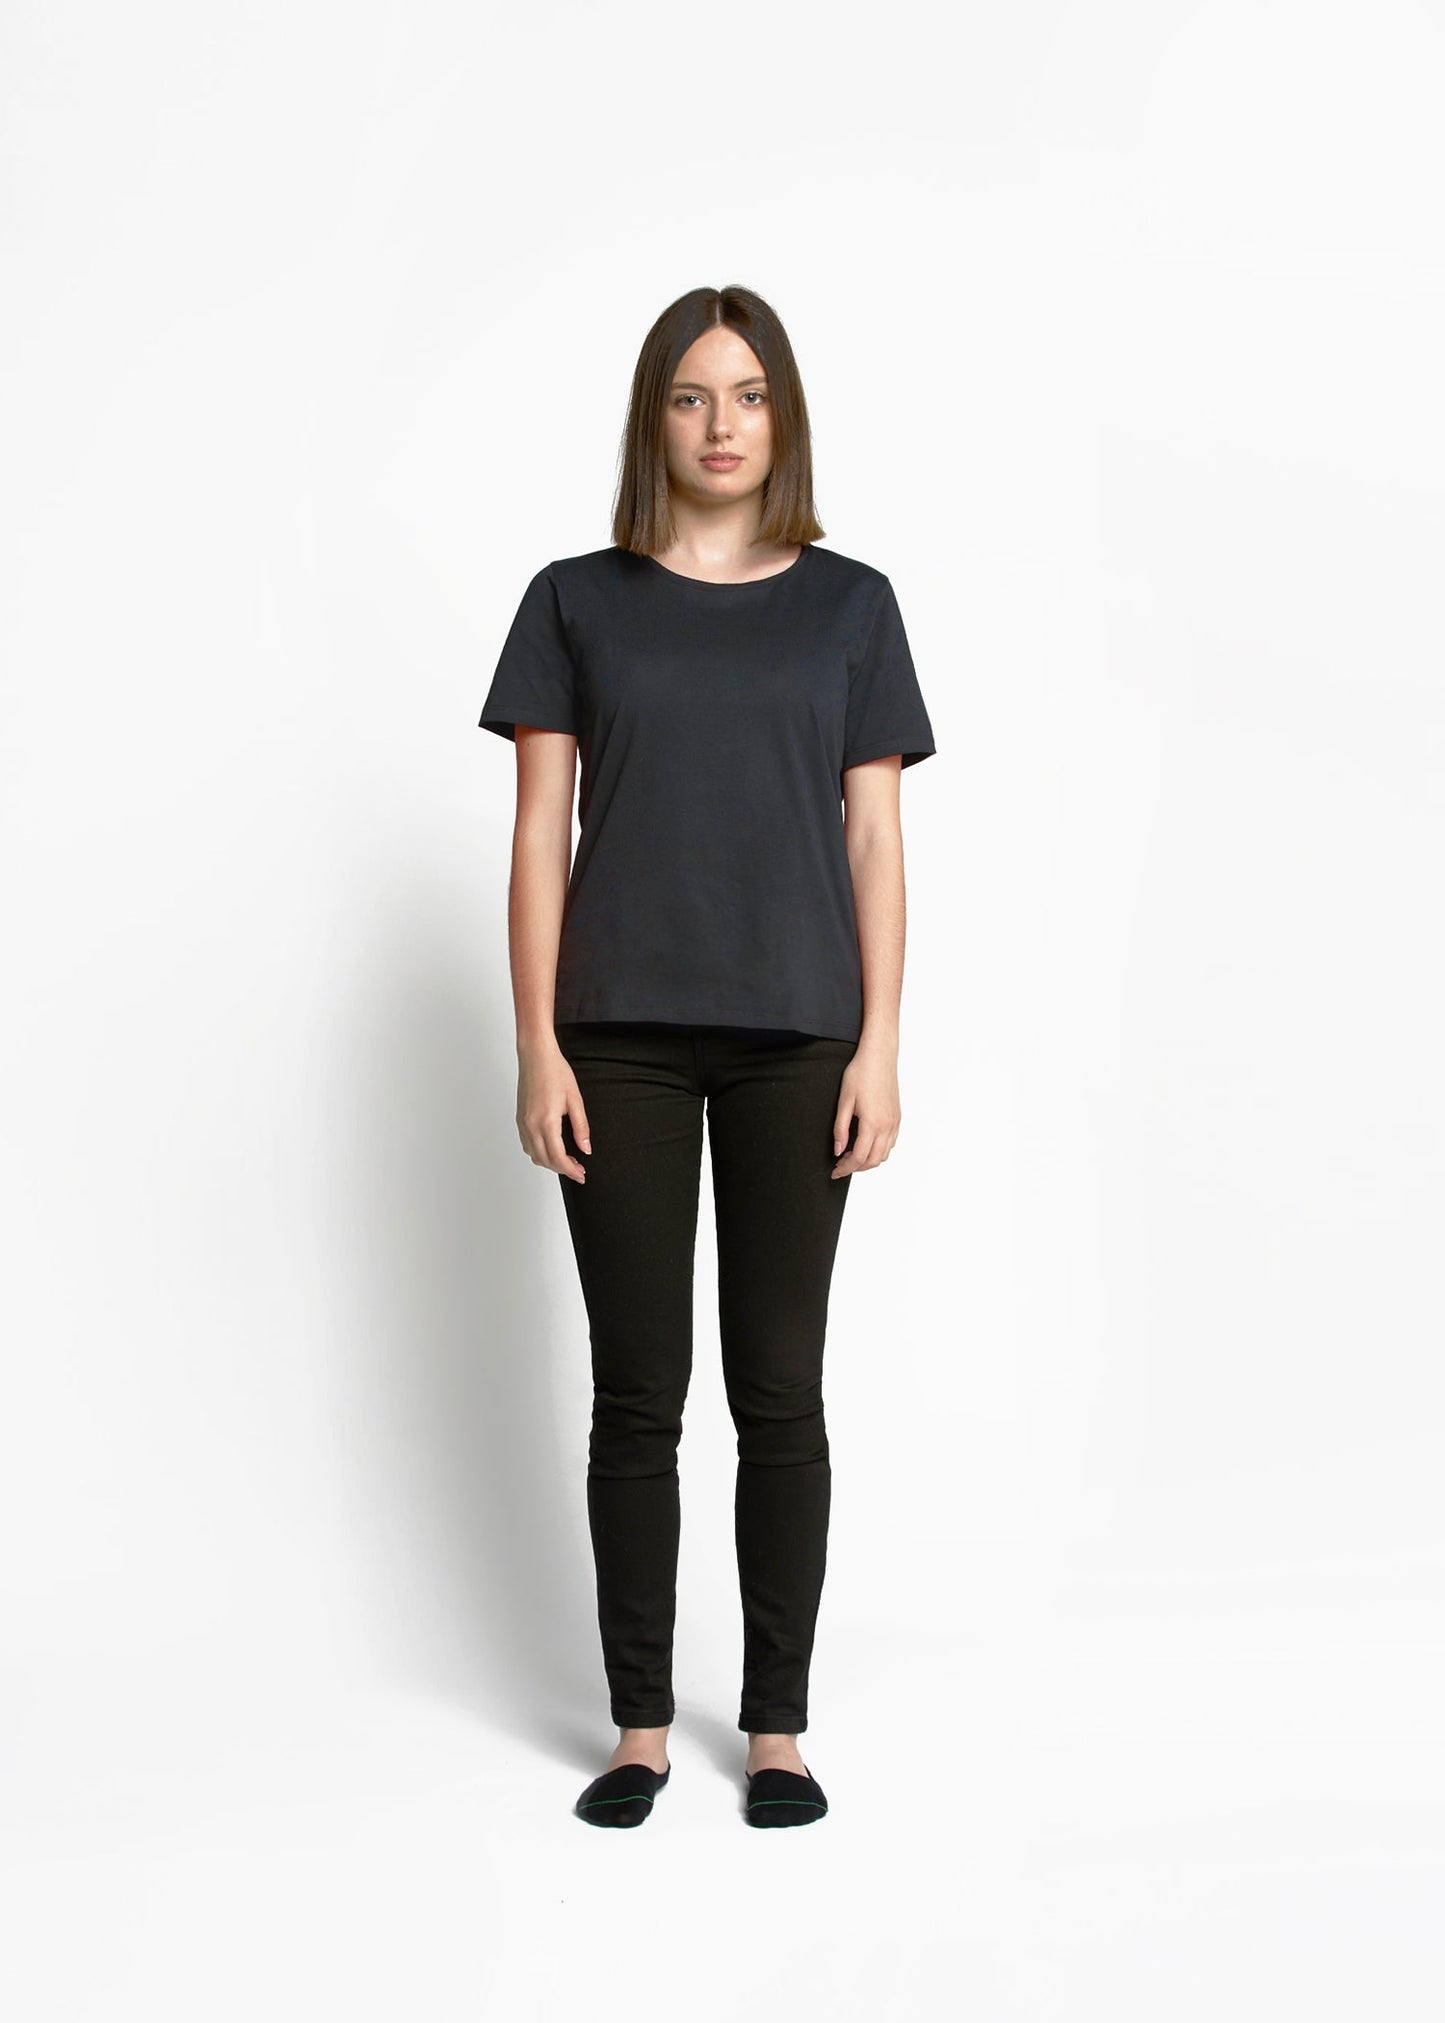 Camiseta algodón orgánico Mujer (5 unidades)